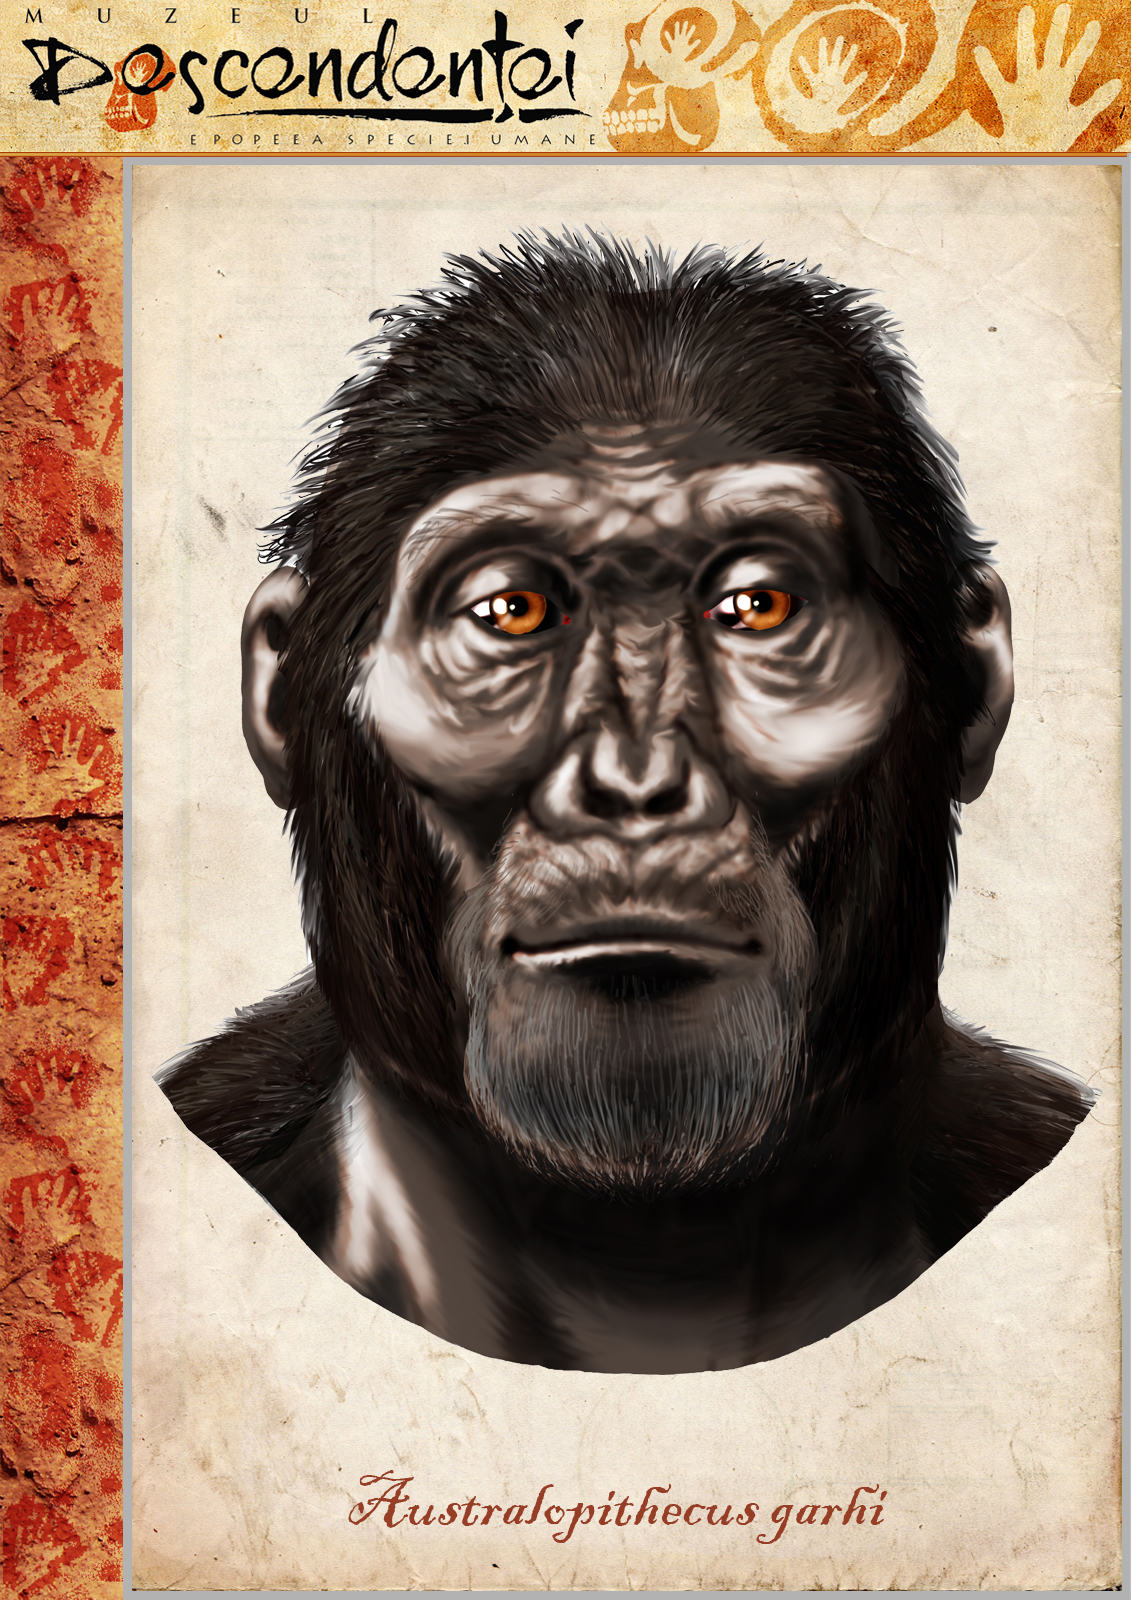 Australopithecus garh afarensis anamensis evolution  human  homo  neanderthal  erectus ergaster habilis heidelbergensis paranthropus boisei ardipithecus sahelanthropus